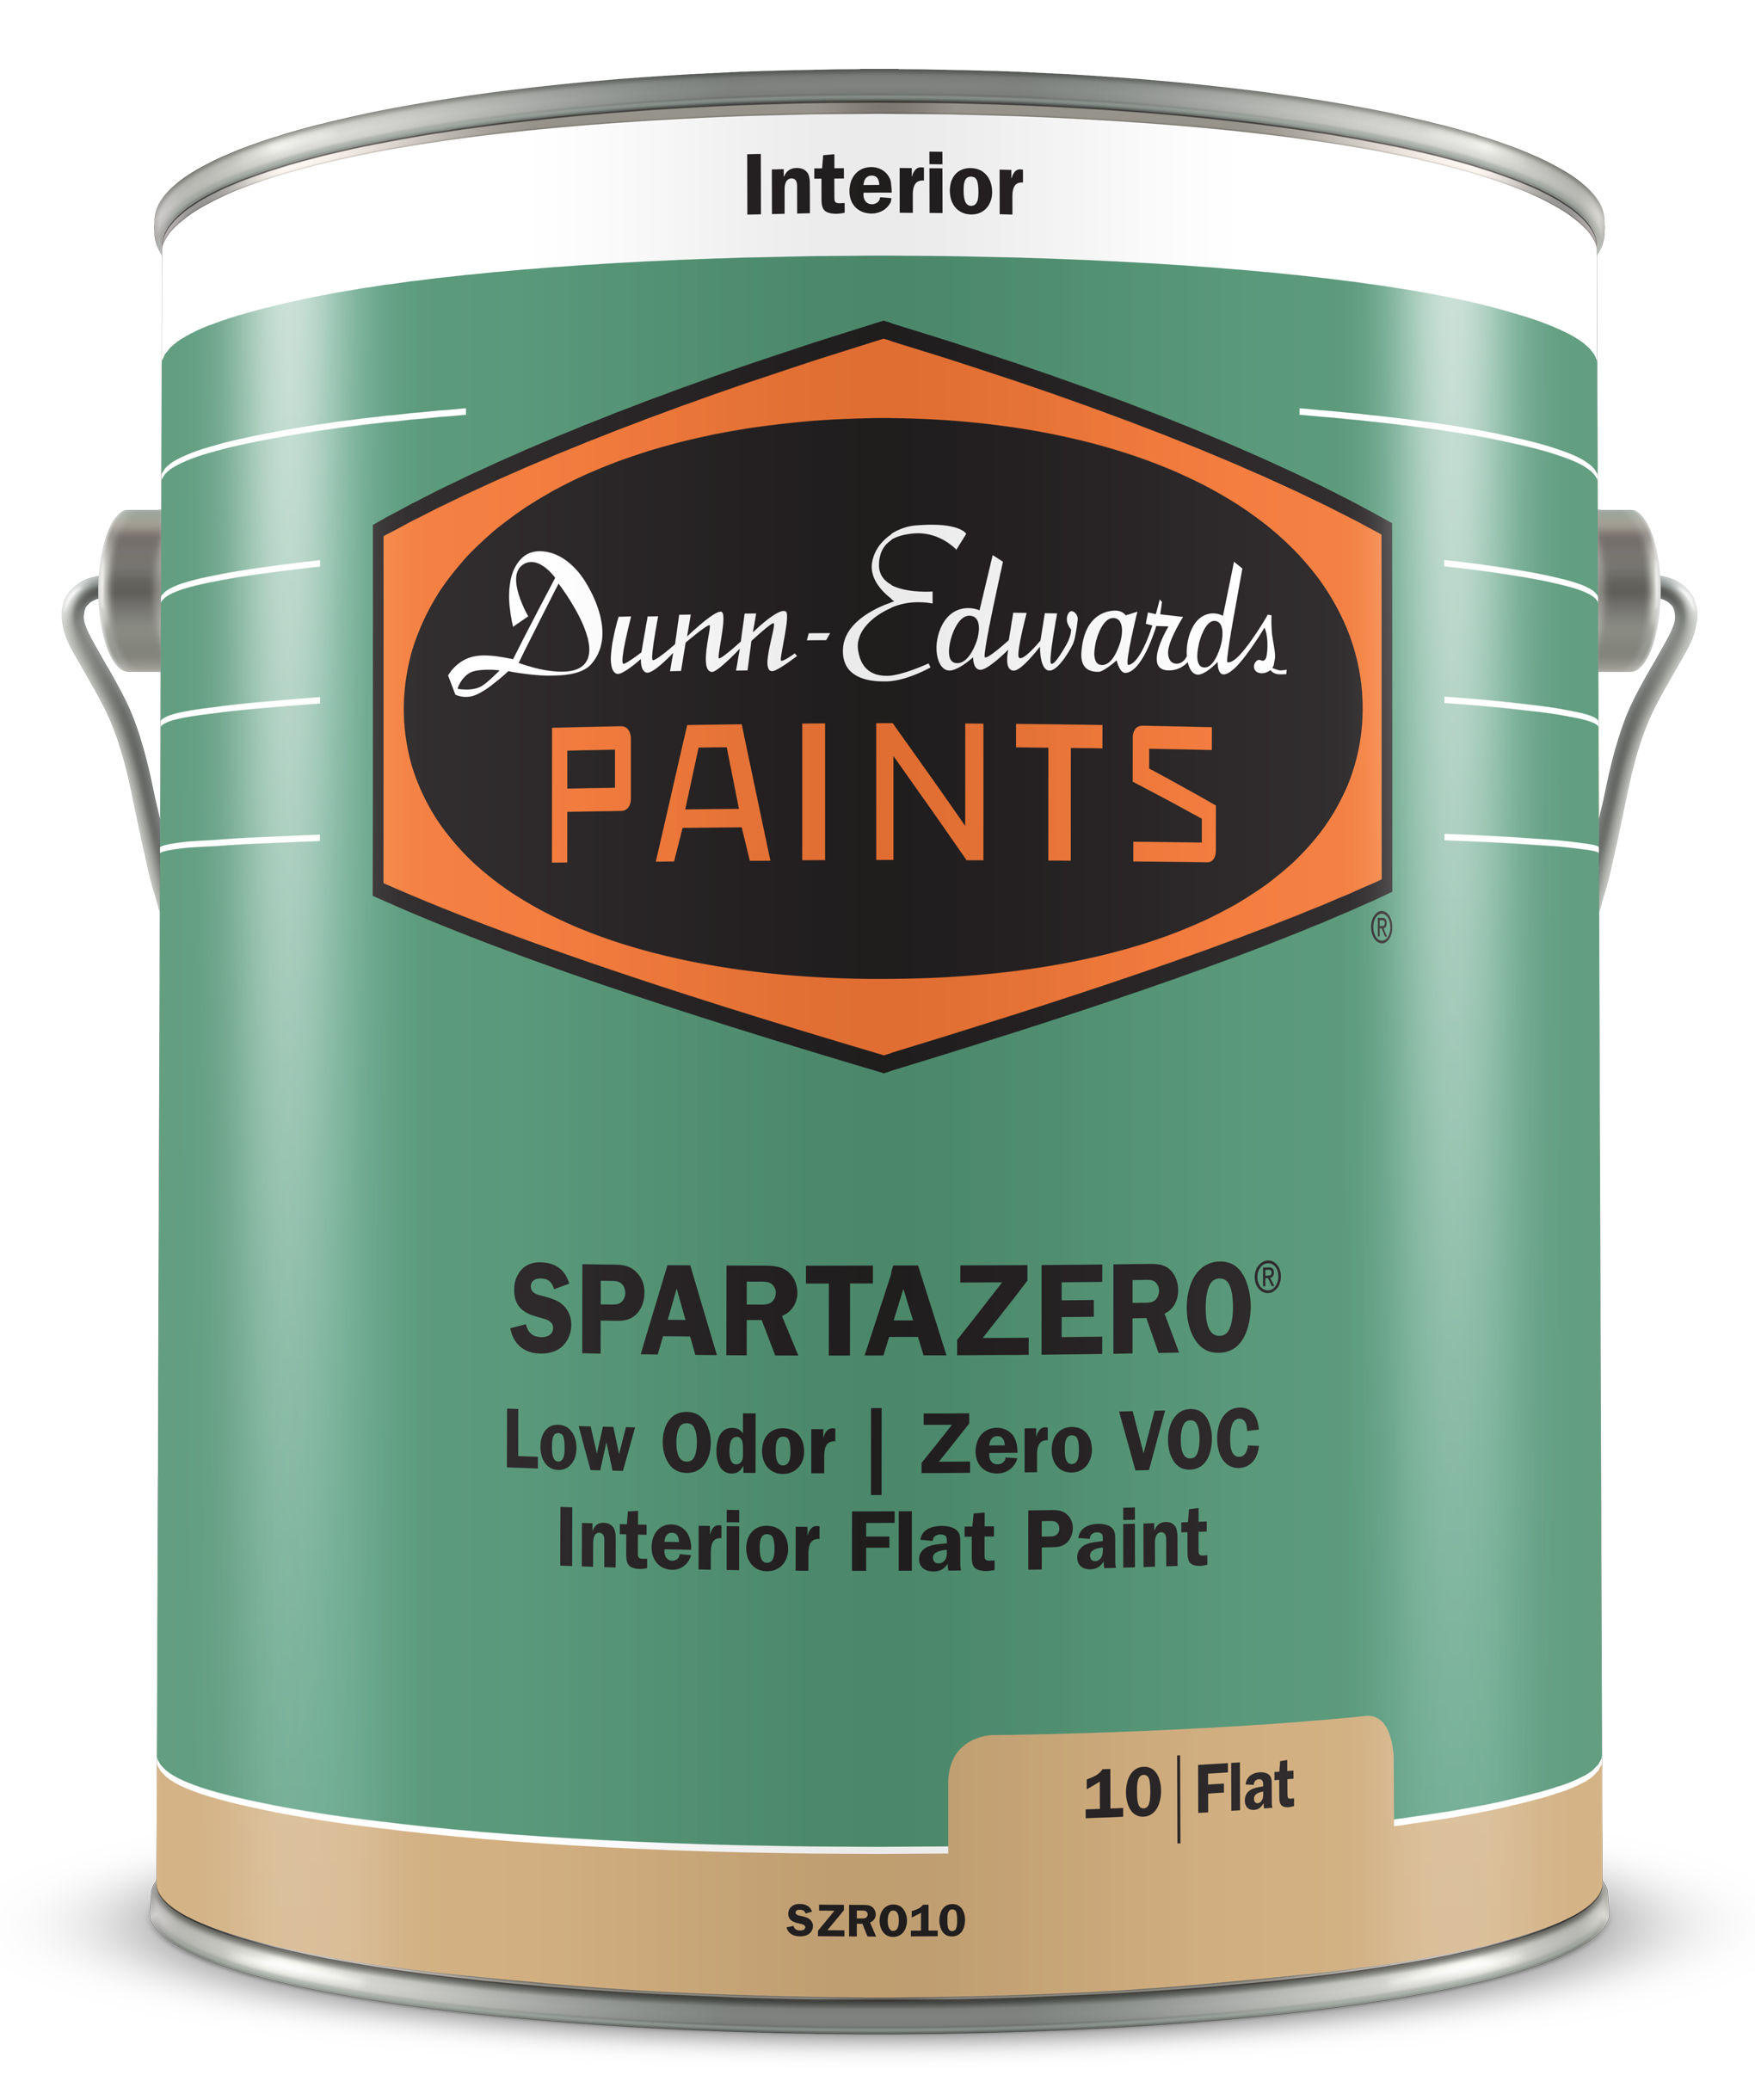 SPARTAZERO Interior Flat Paint Can